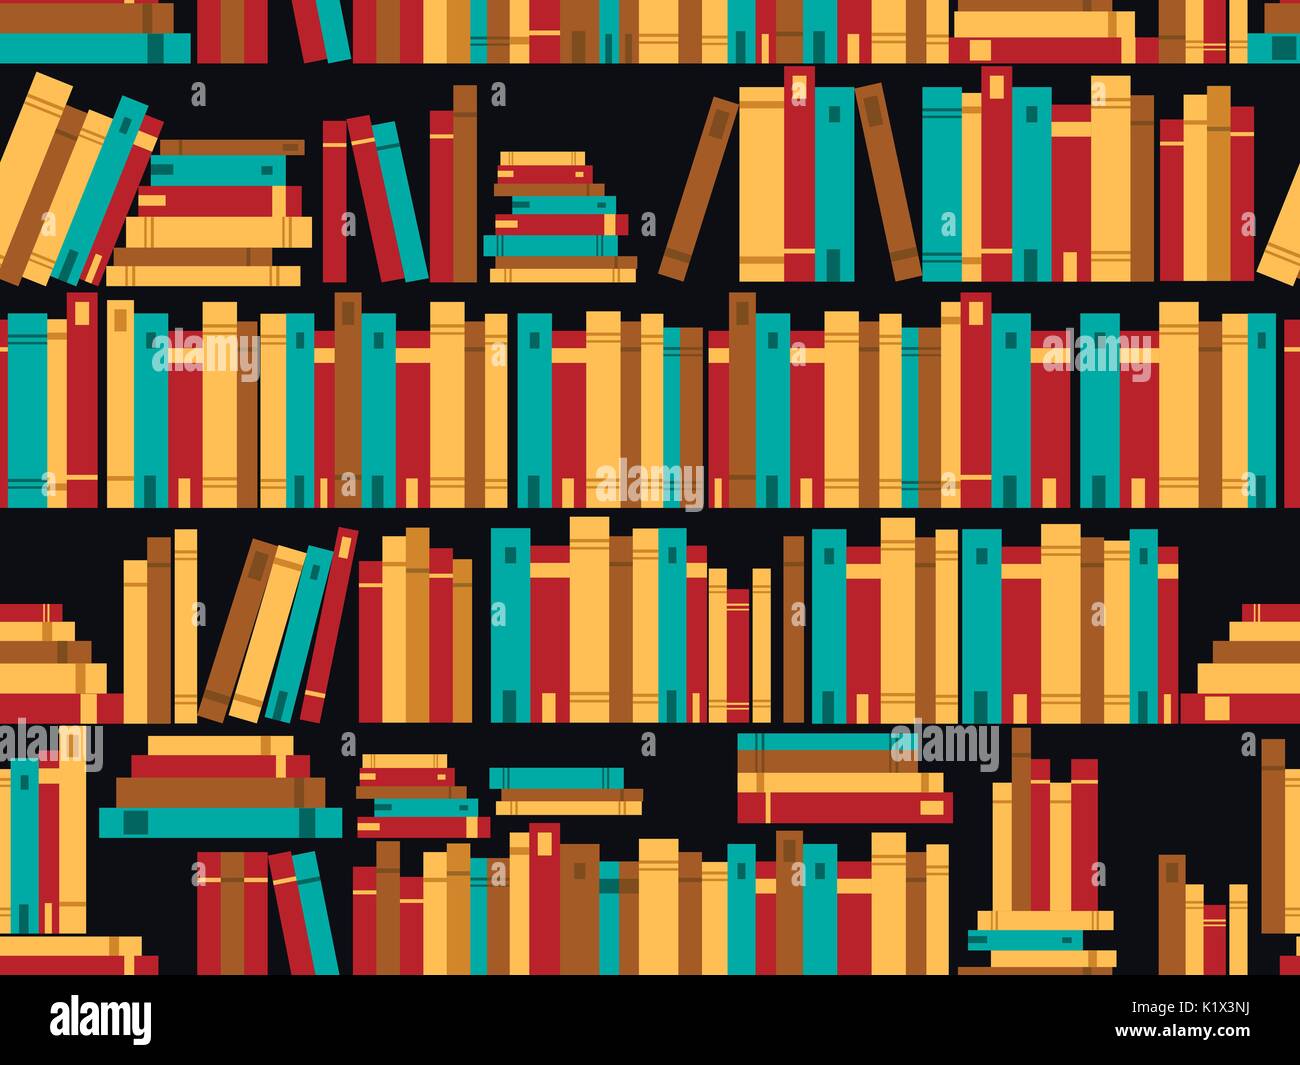 Seamless pattern with books, library bookshelf. Vector illustration Stock Vector